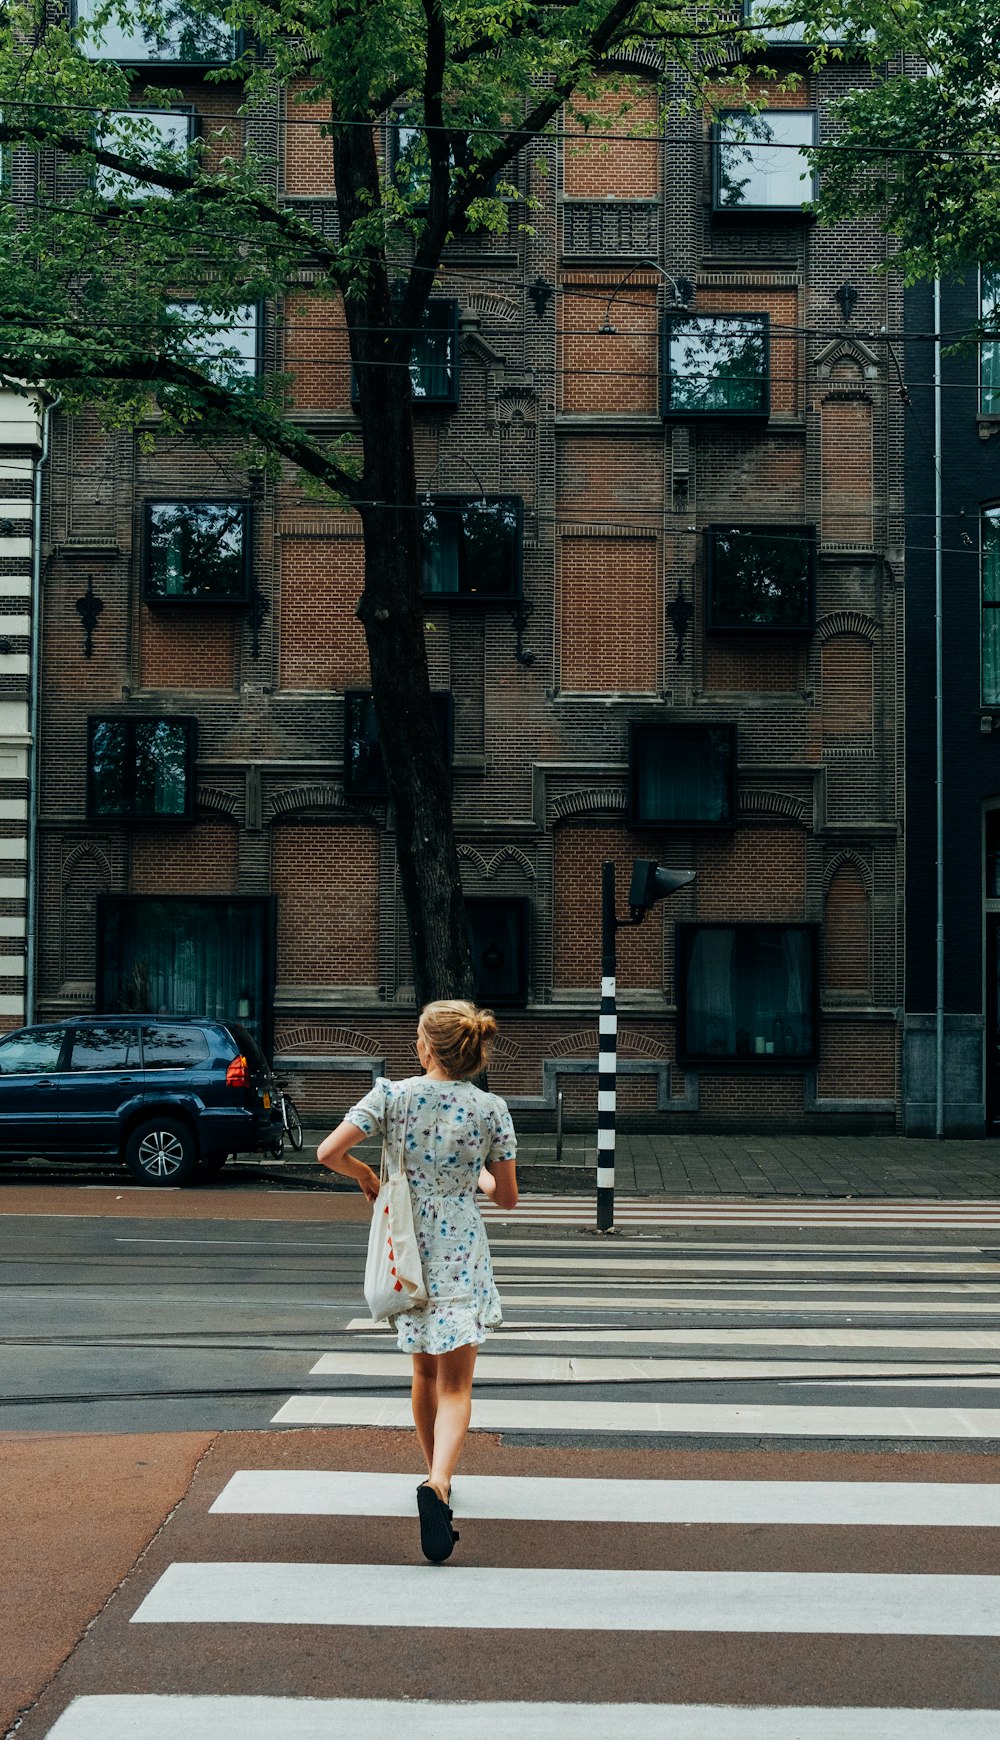 mulher no vestido branco que anda na faixa de pedestres durante o dia